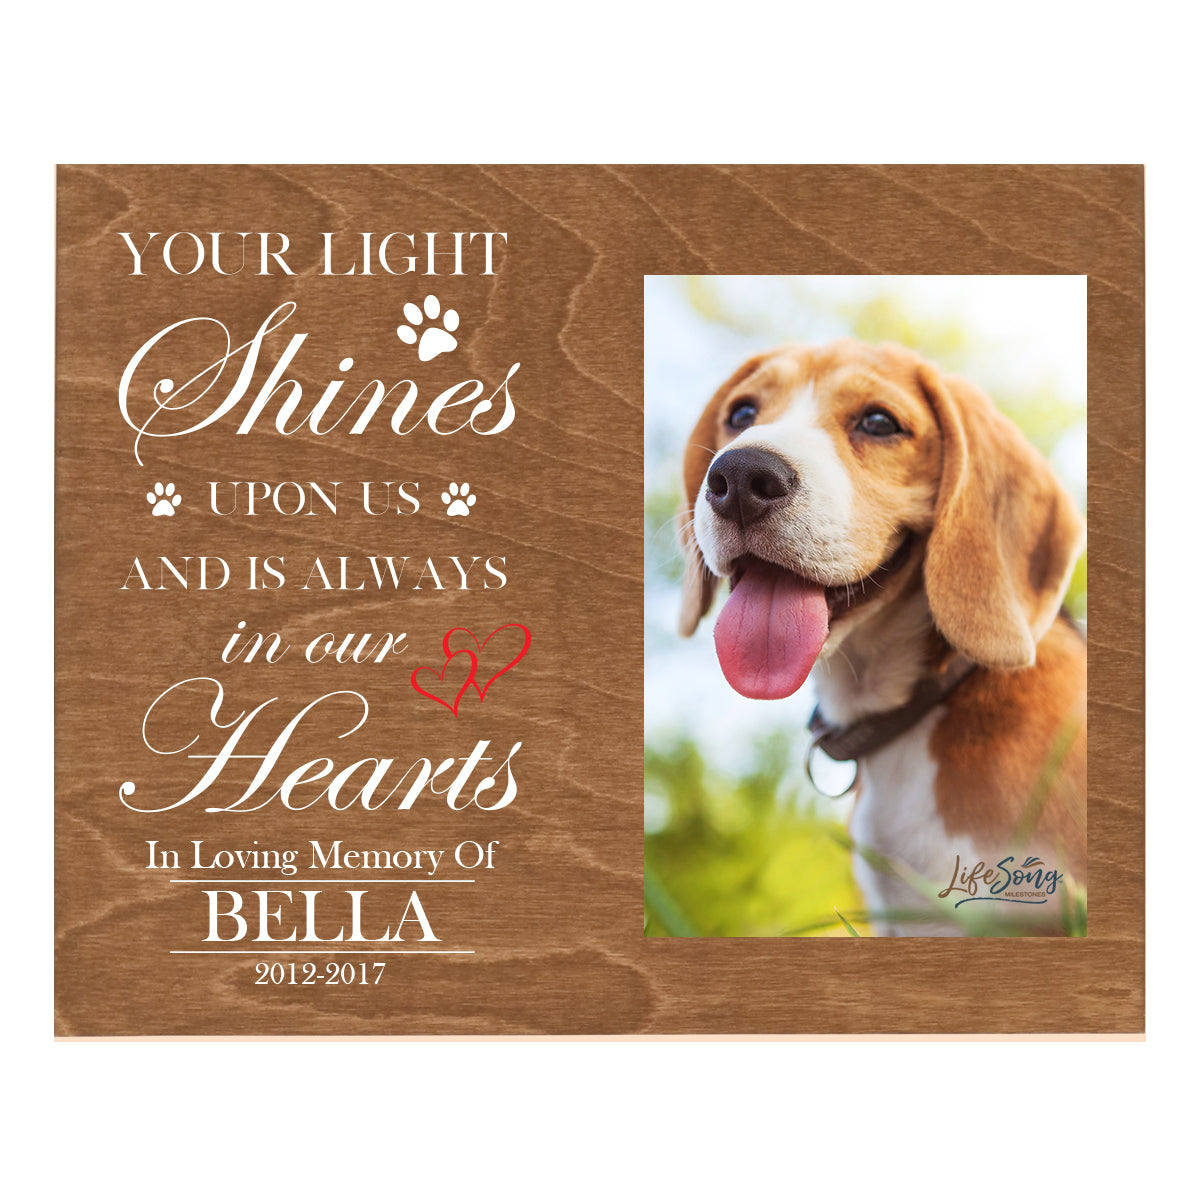 Pet Memorial Photo Wall Plaque Décor - Your Light Shines Upon Us